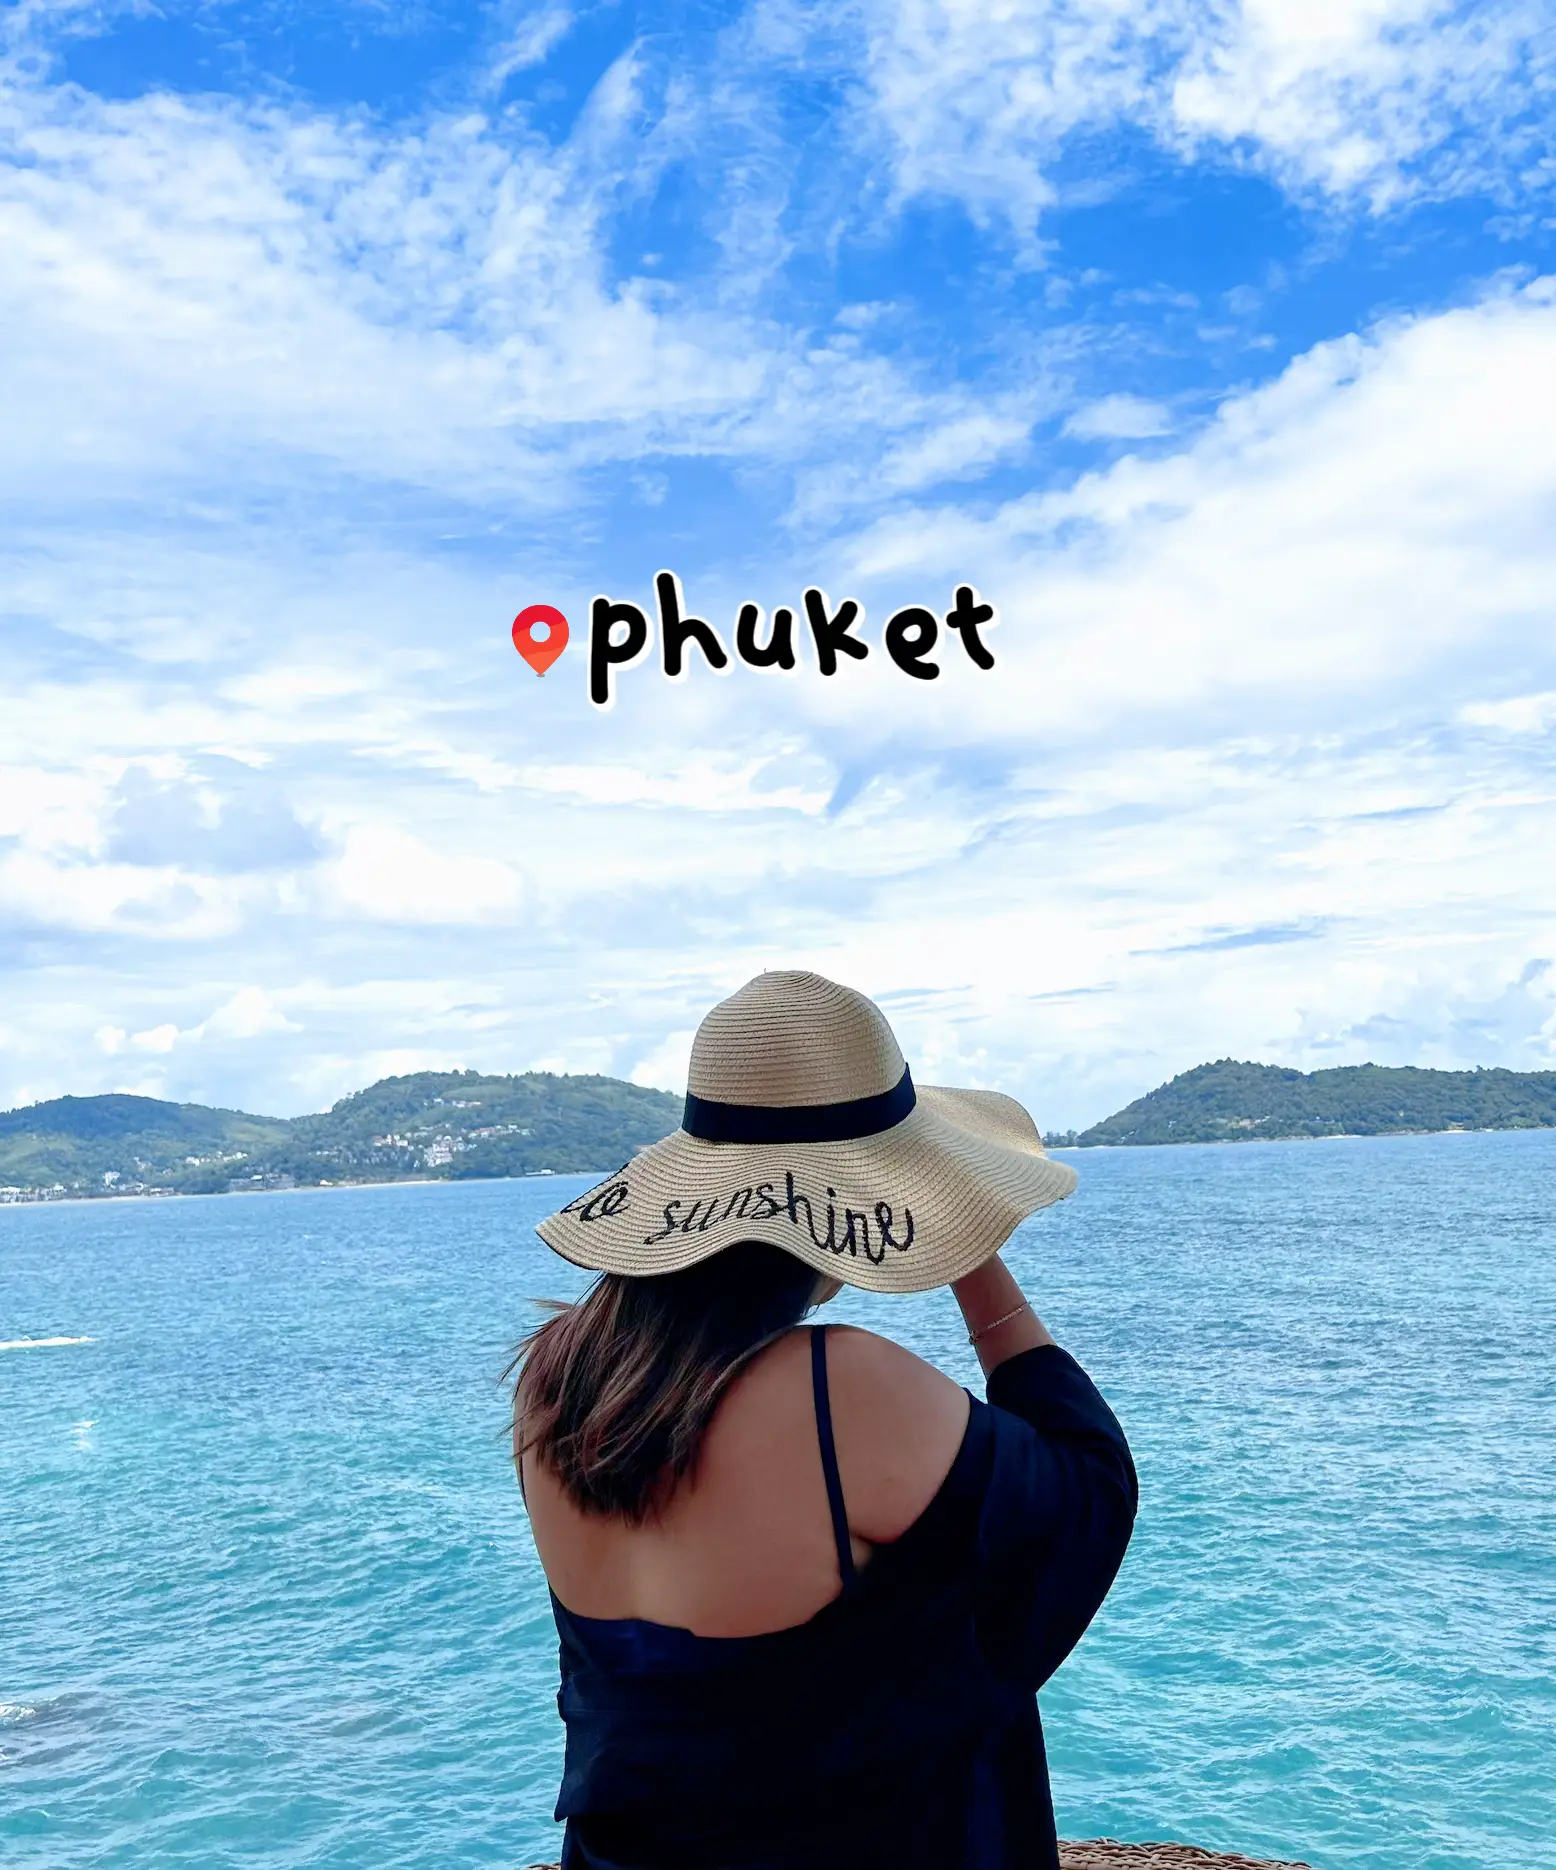 🇹🇭 A Phuket Ping Pong Show and Thai Food Vlog 